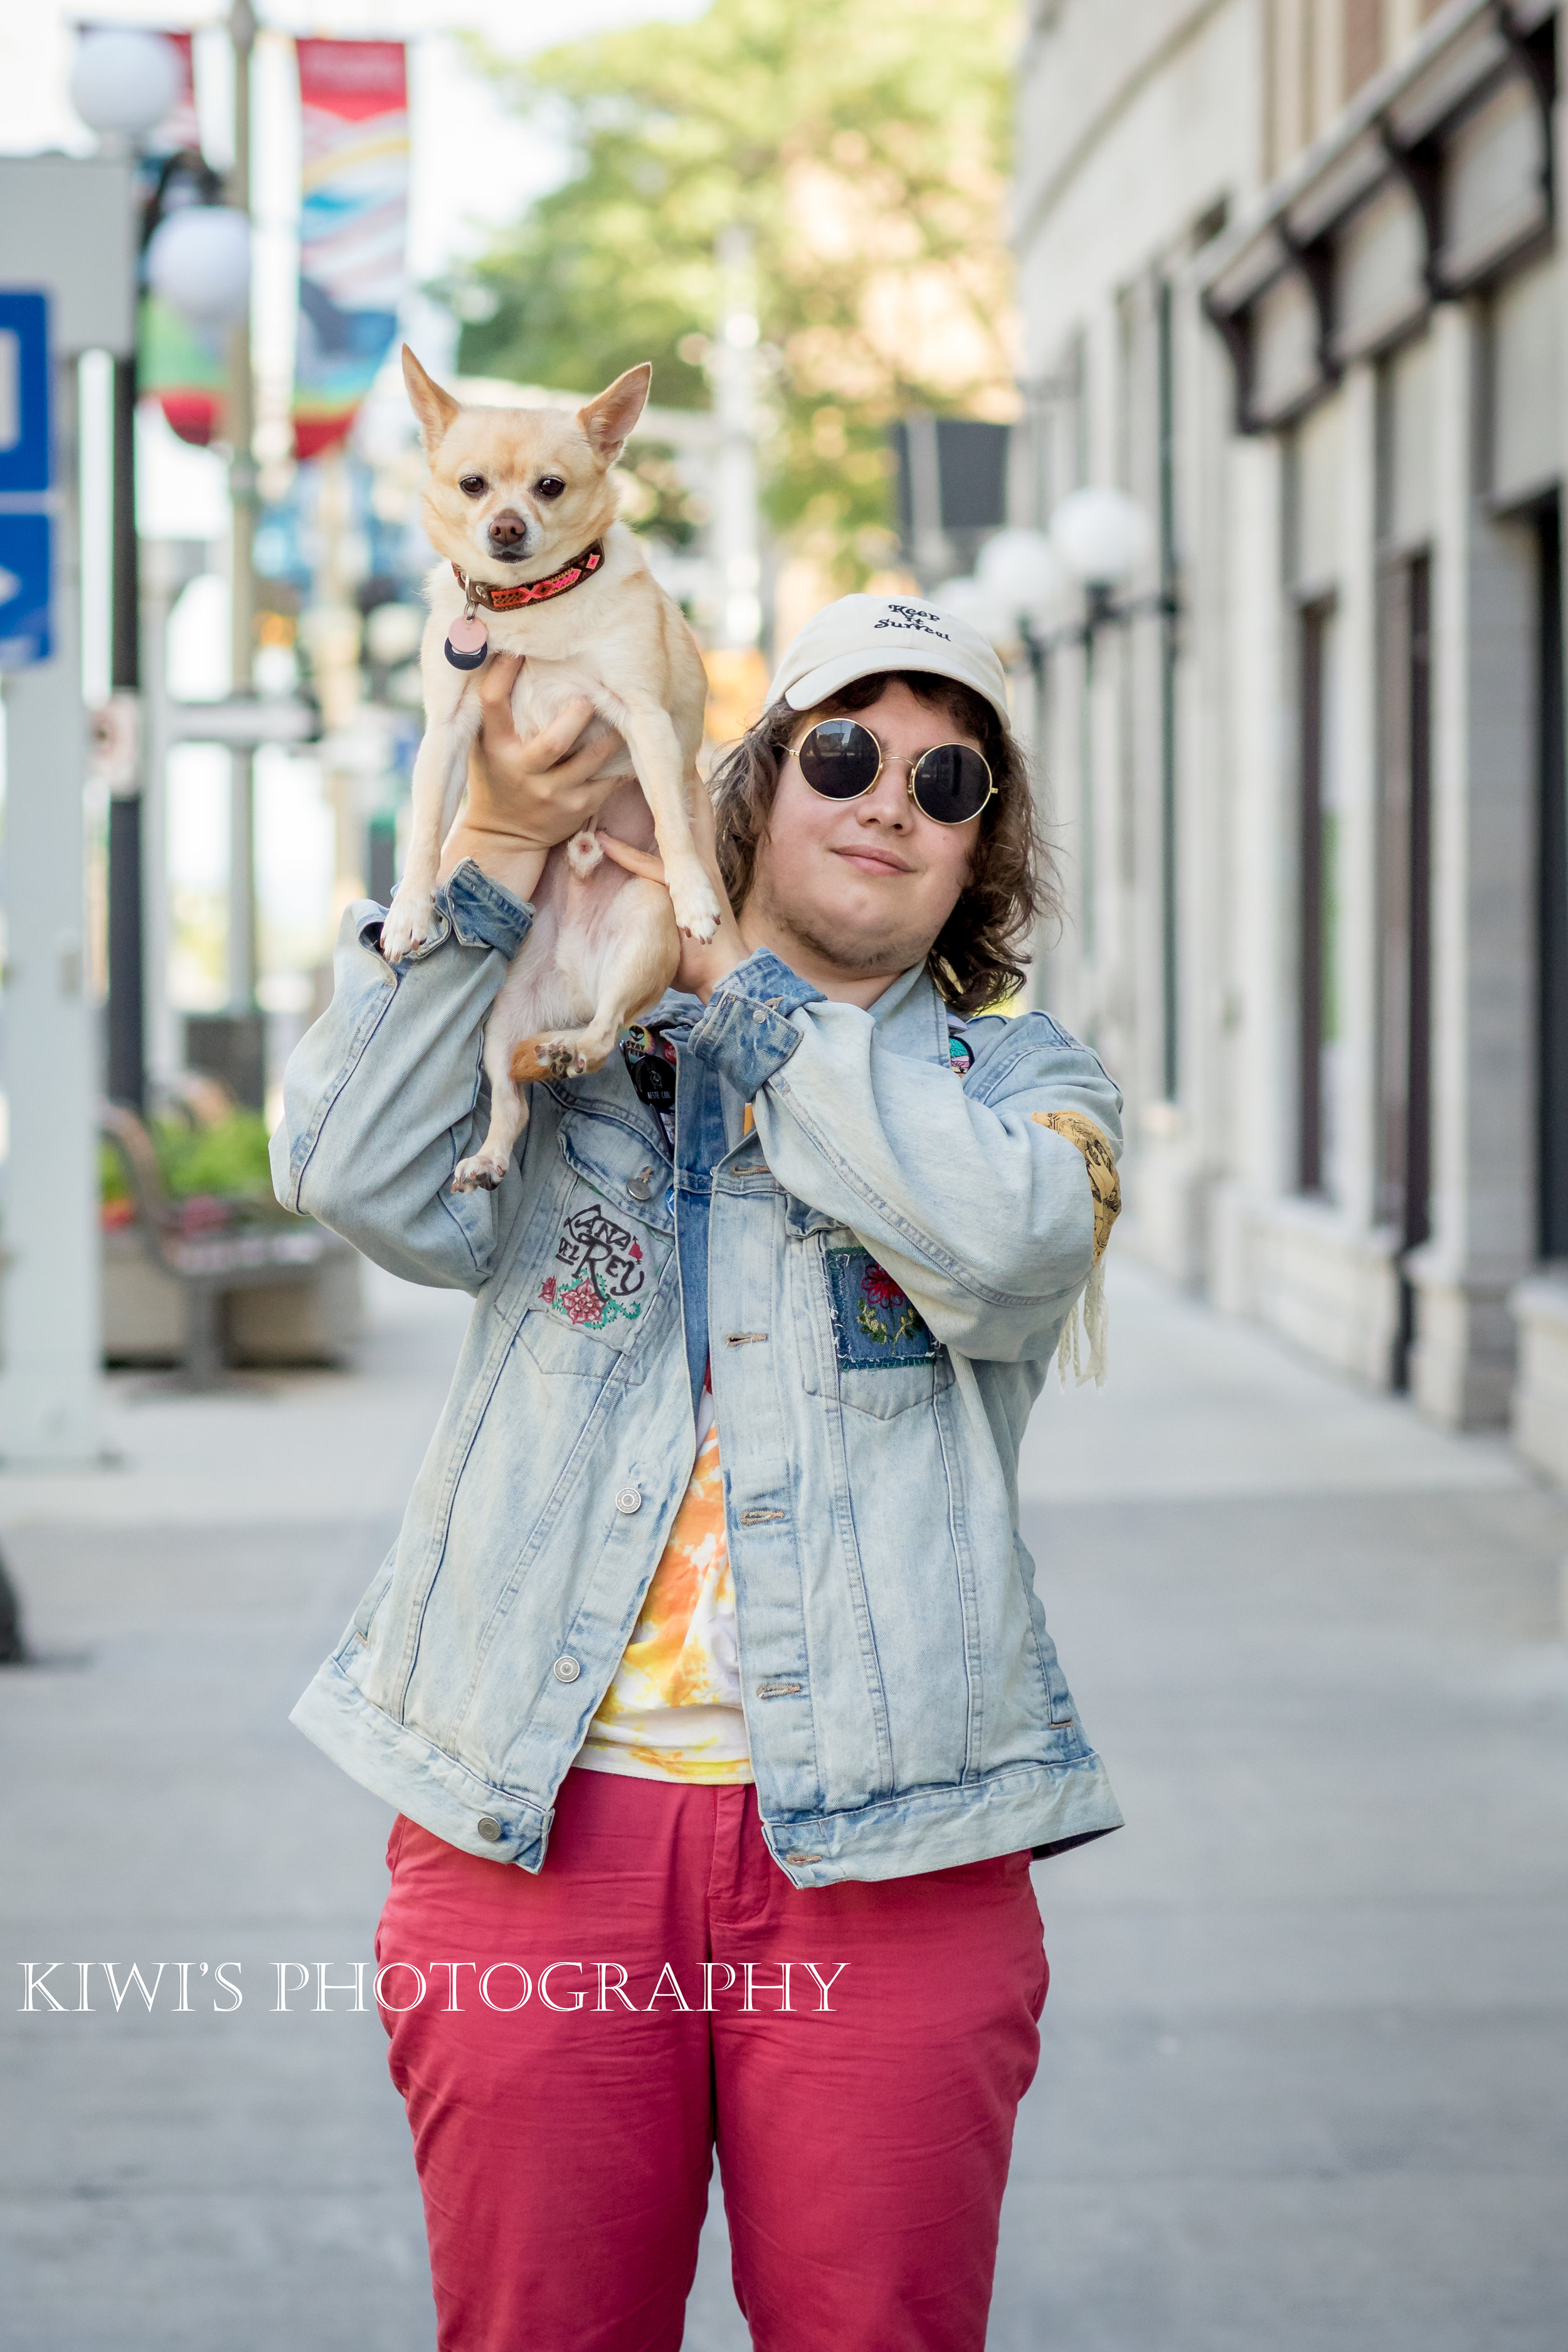 How I met my Best Friend - Ellis & Mac A. Roni - ottawa pet photography